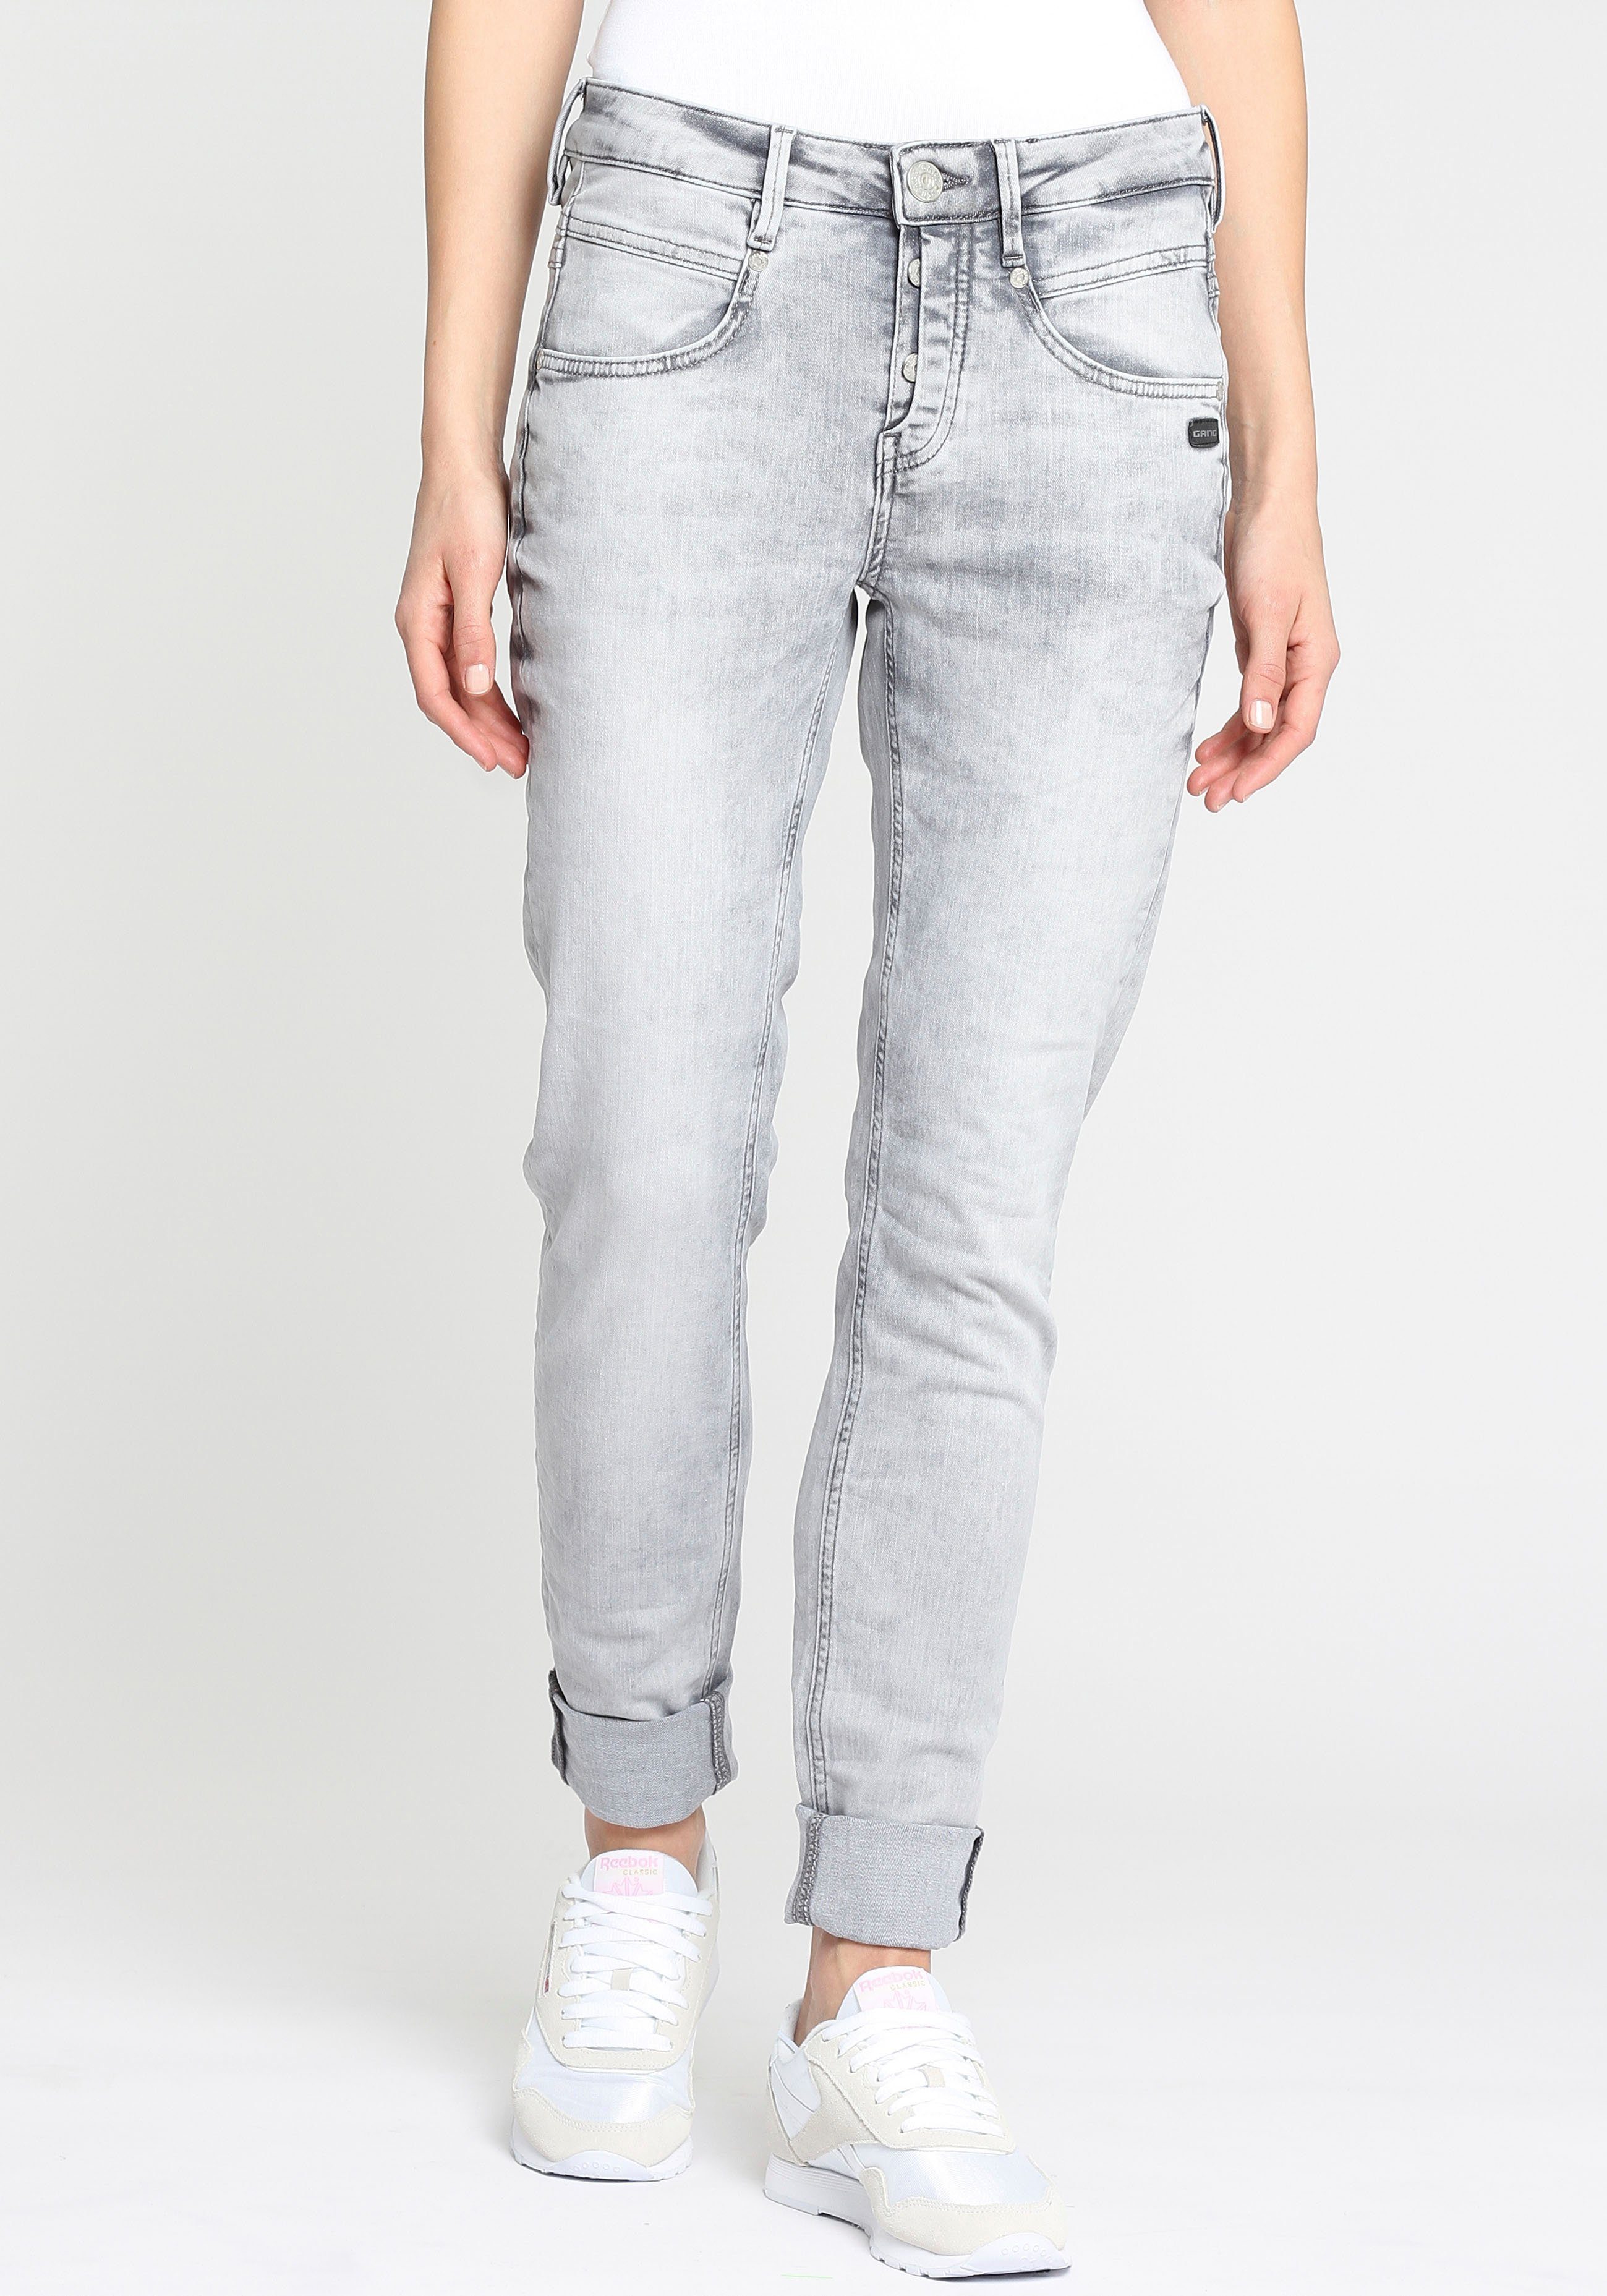 ein Style echter 94Medina oder Hingucker GANG mit Knopfleiste, - halb Skinny-fit-Jeans gekrempelt lang Cooler stylischer offener